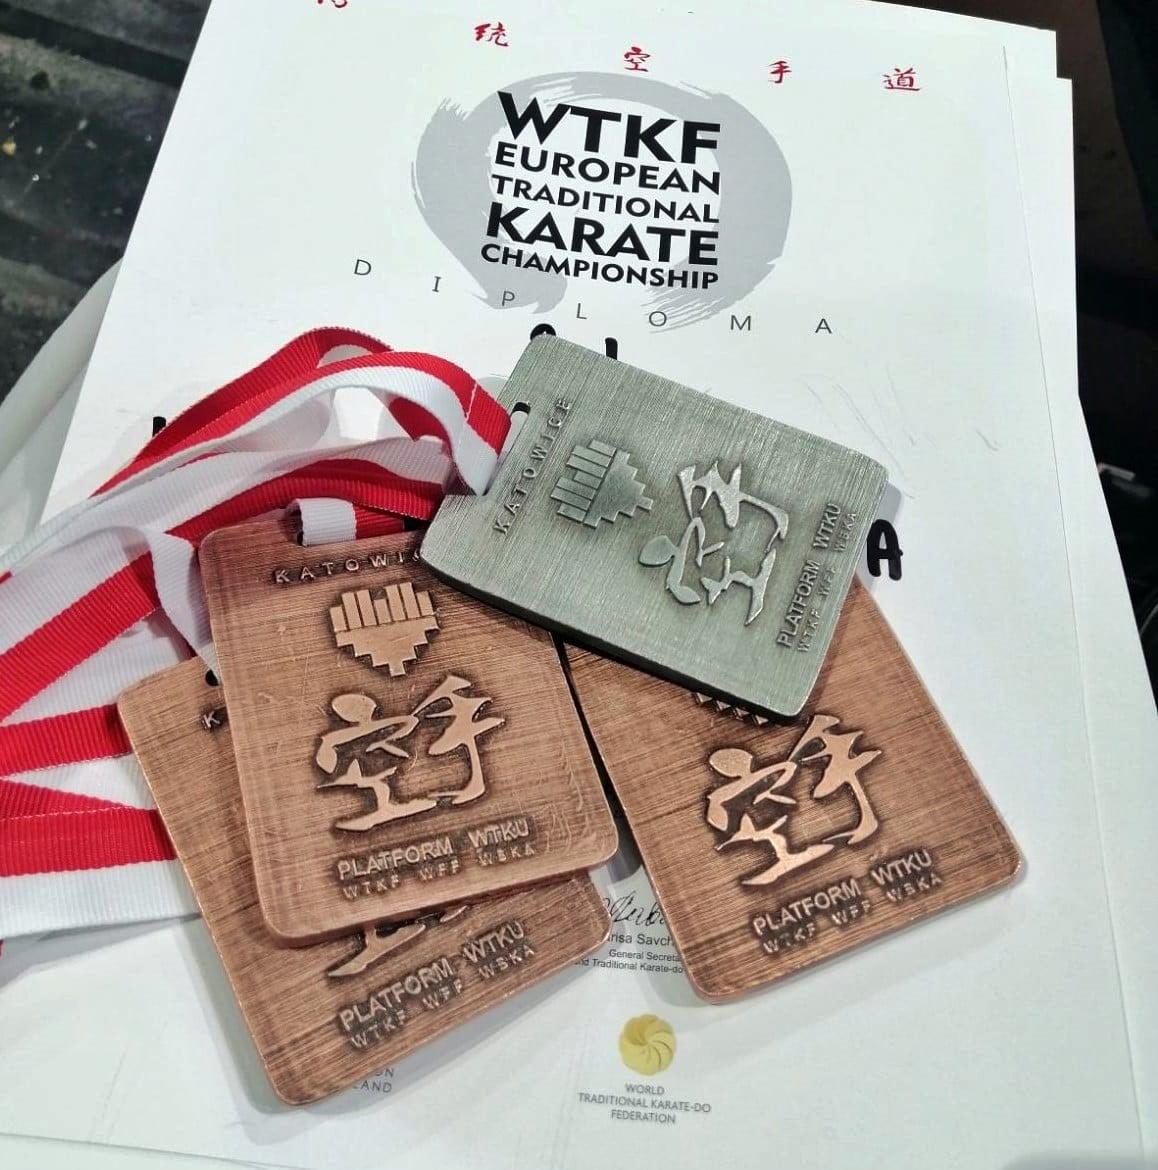 4 каратиста из Константиновки завоевали 10 медалей на Чемпионате Европы